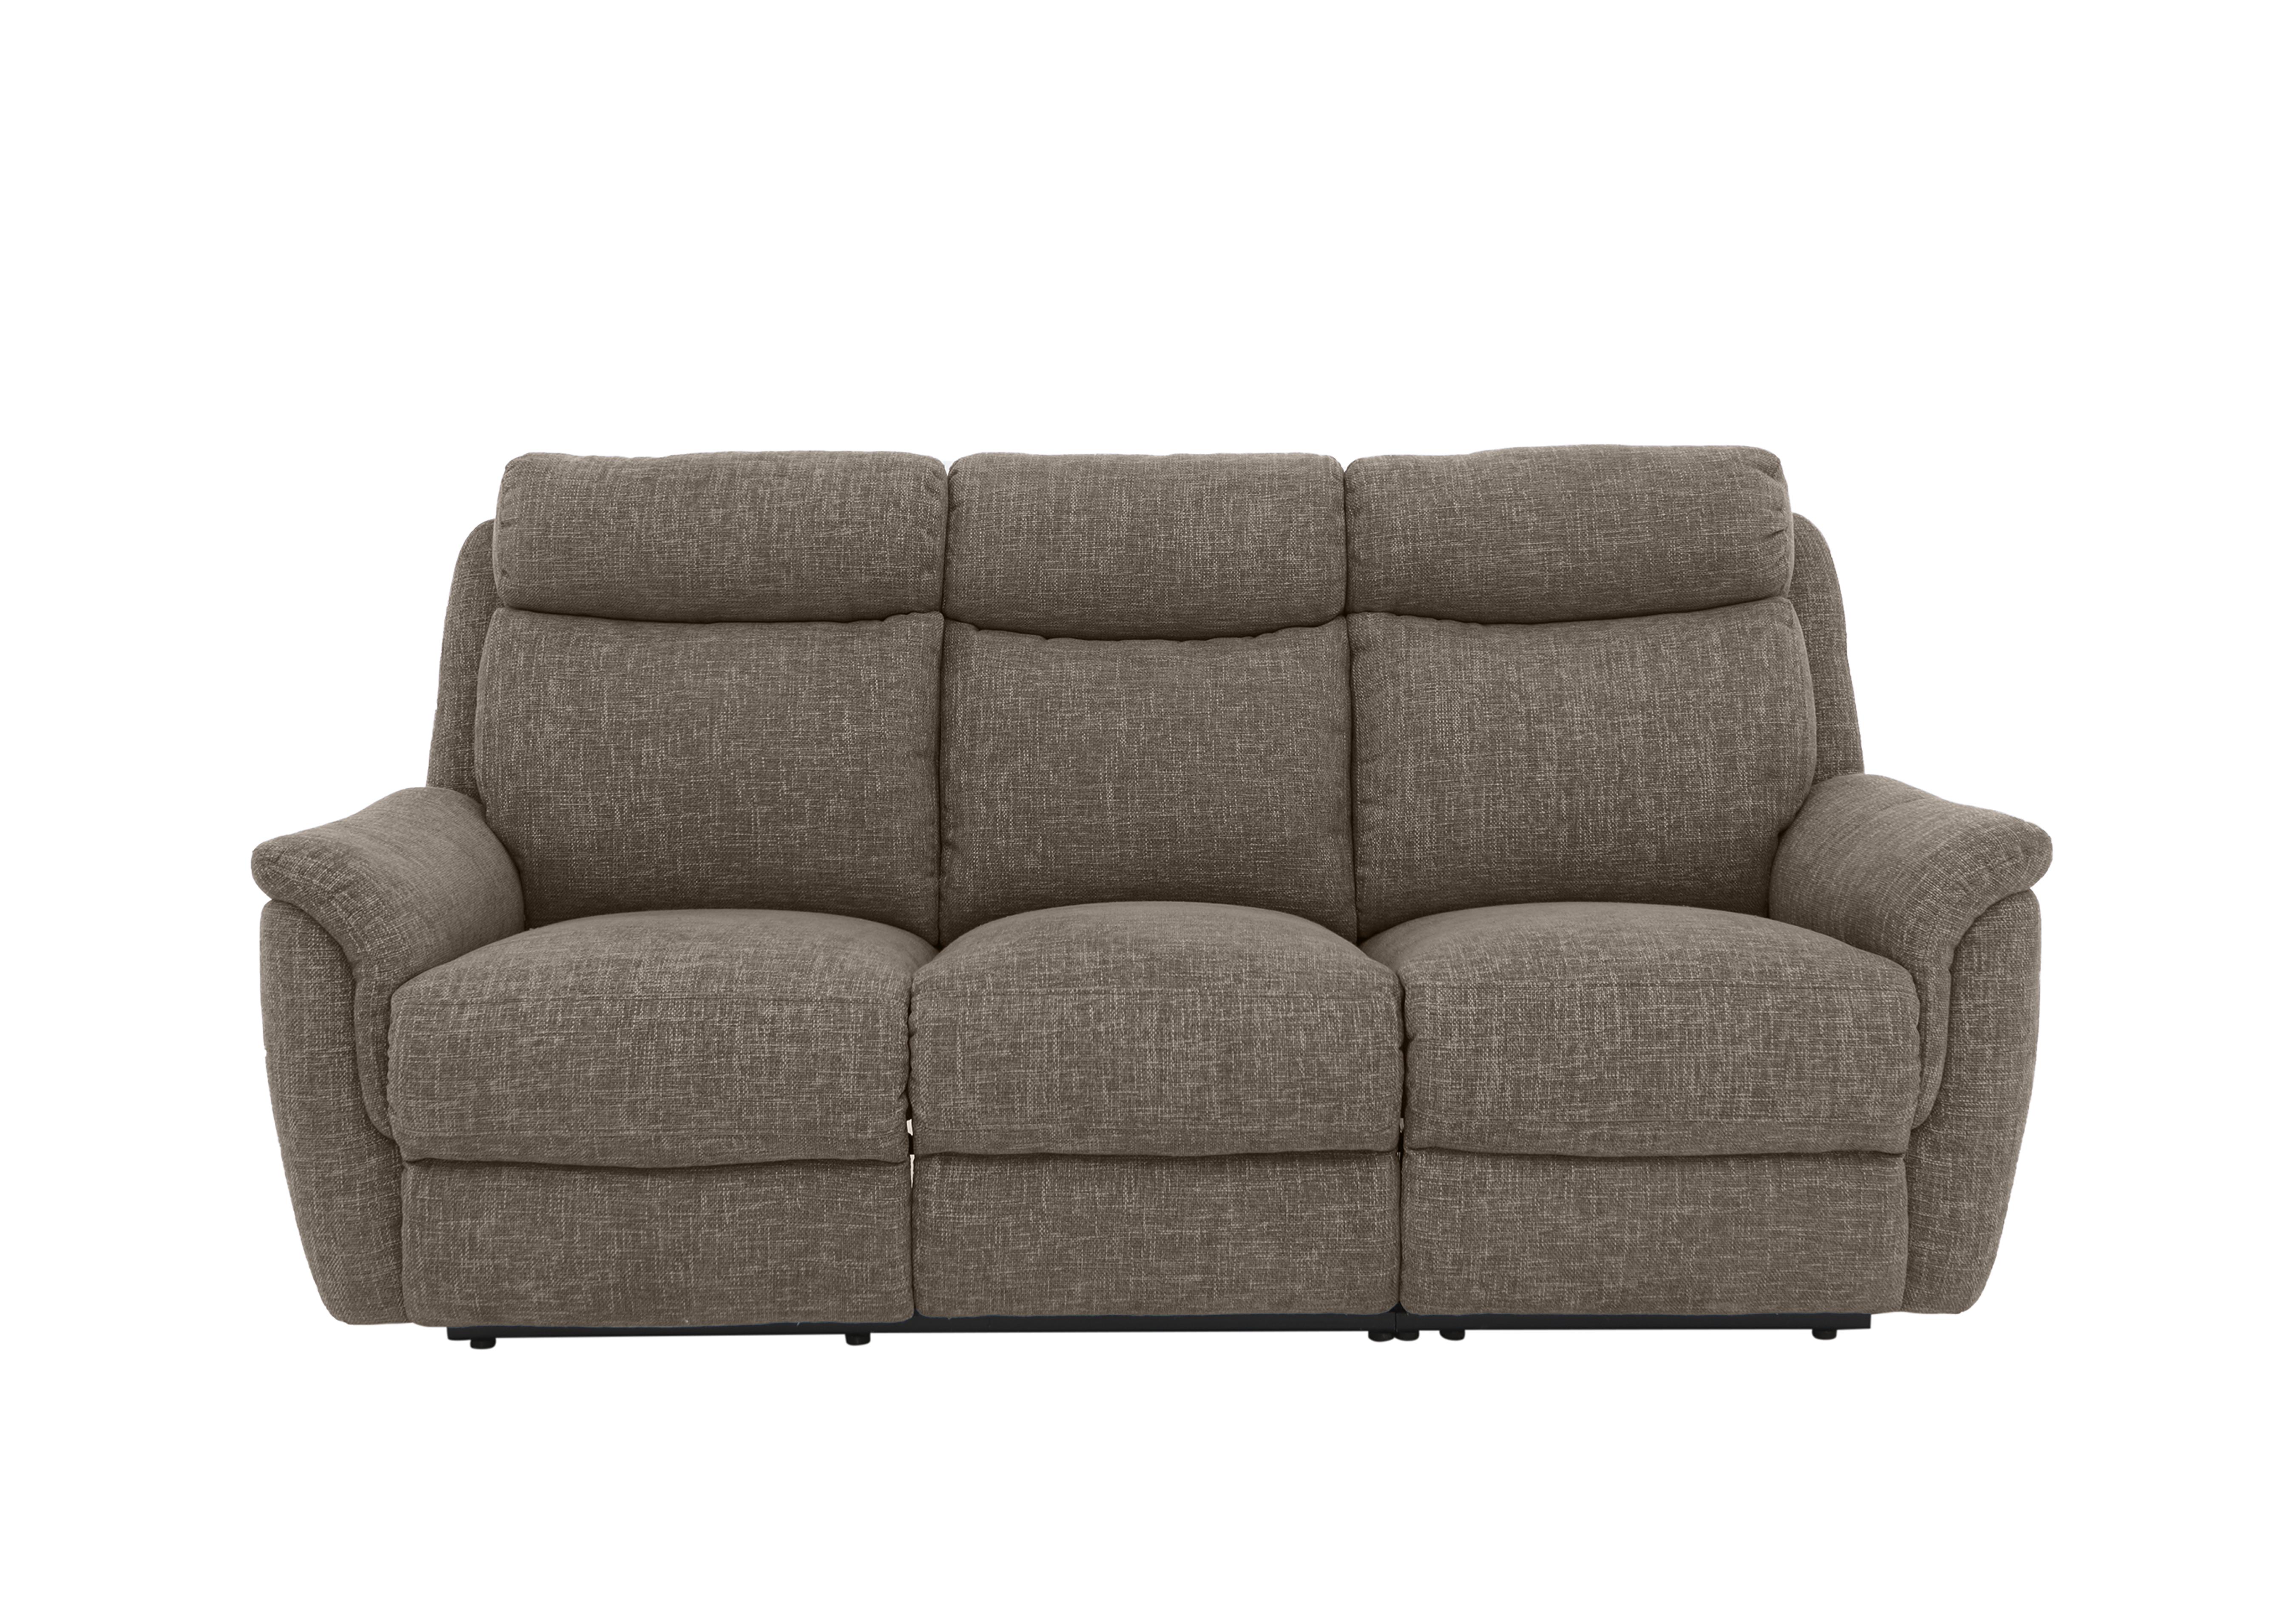 Orlando 3 Seater Fabric Sofa in Anivia Brown 15445 on Furniture Village